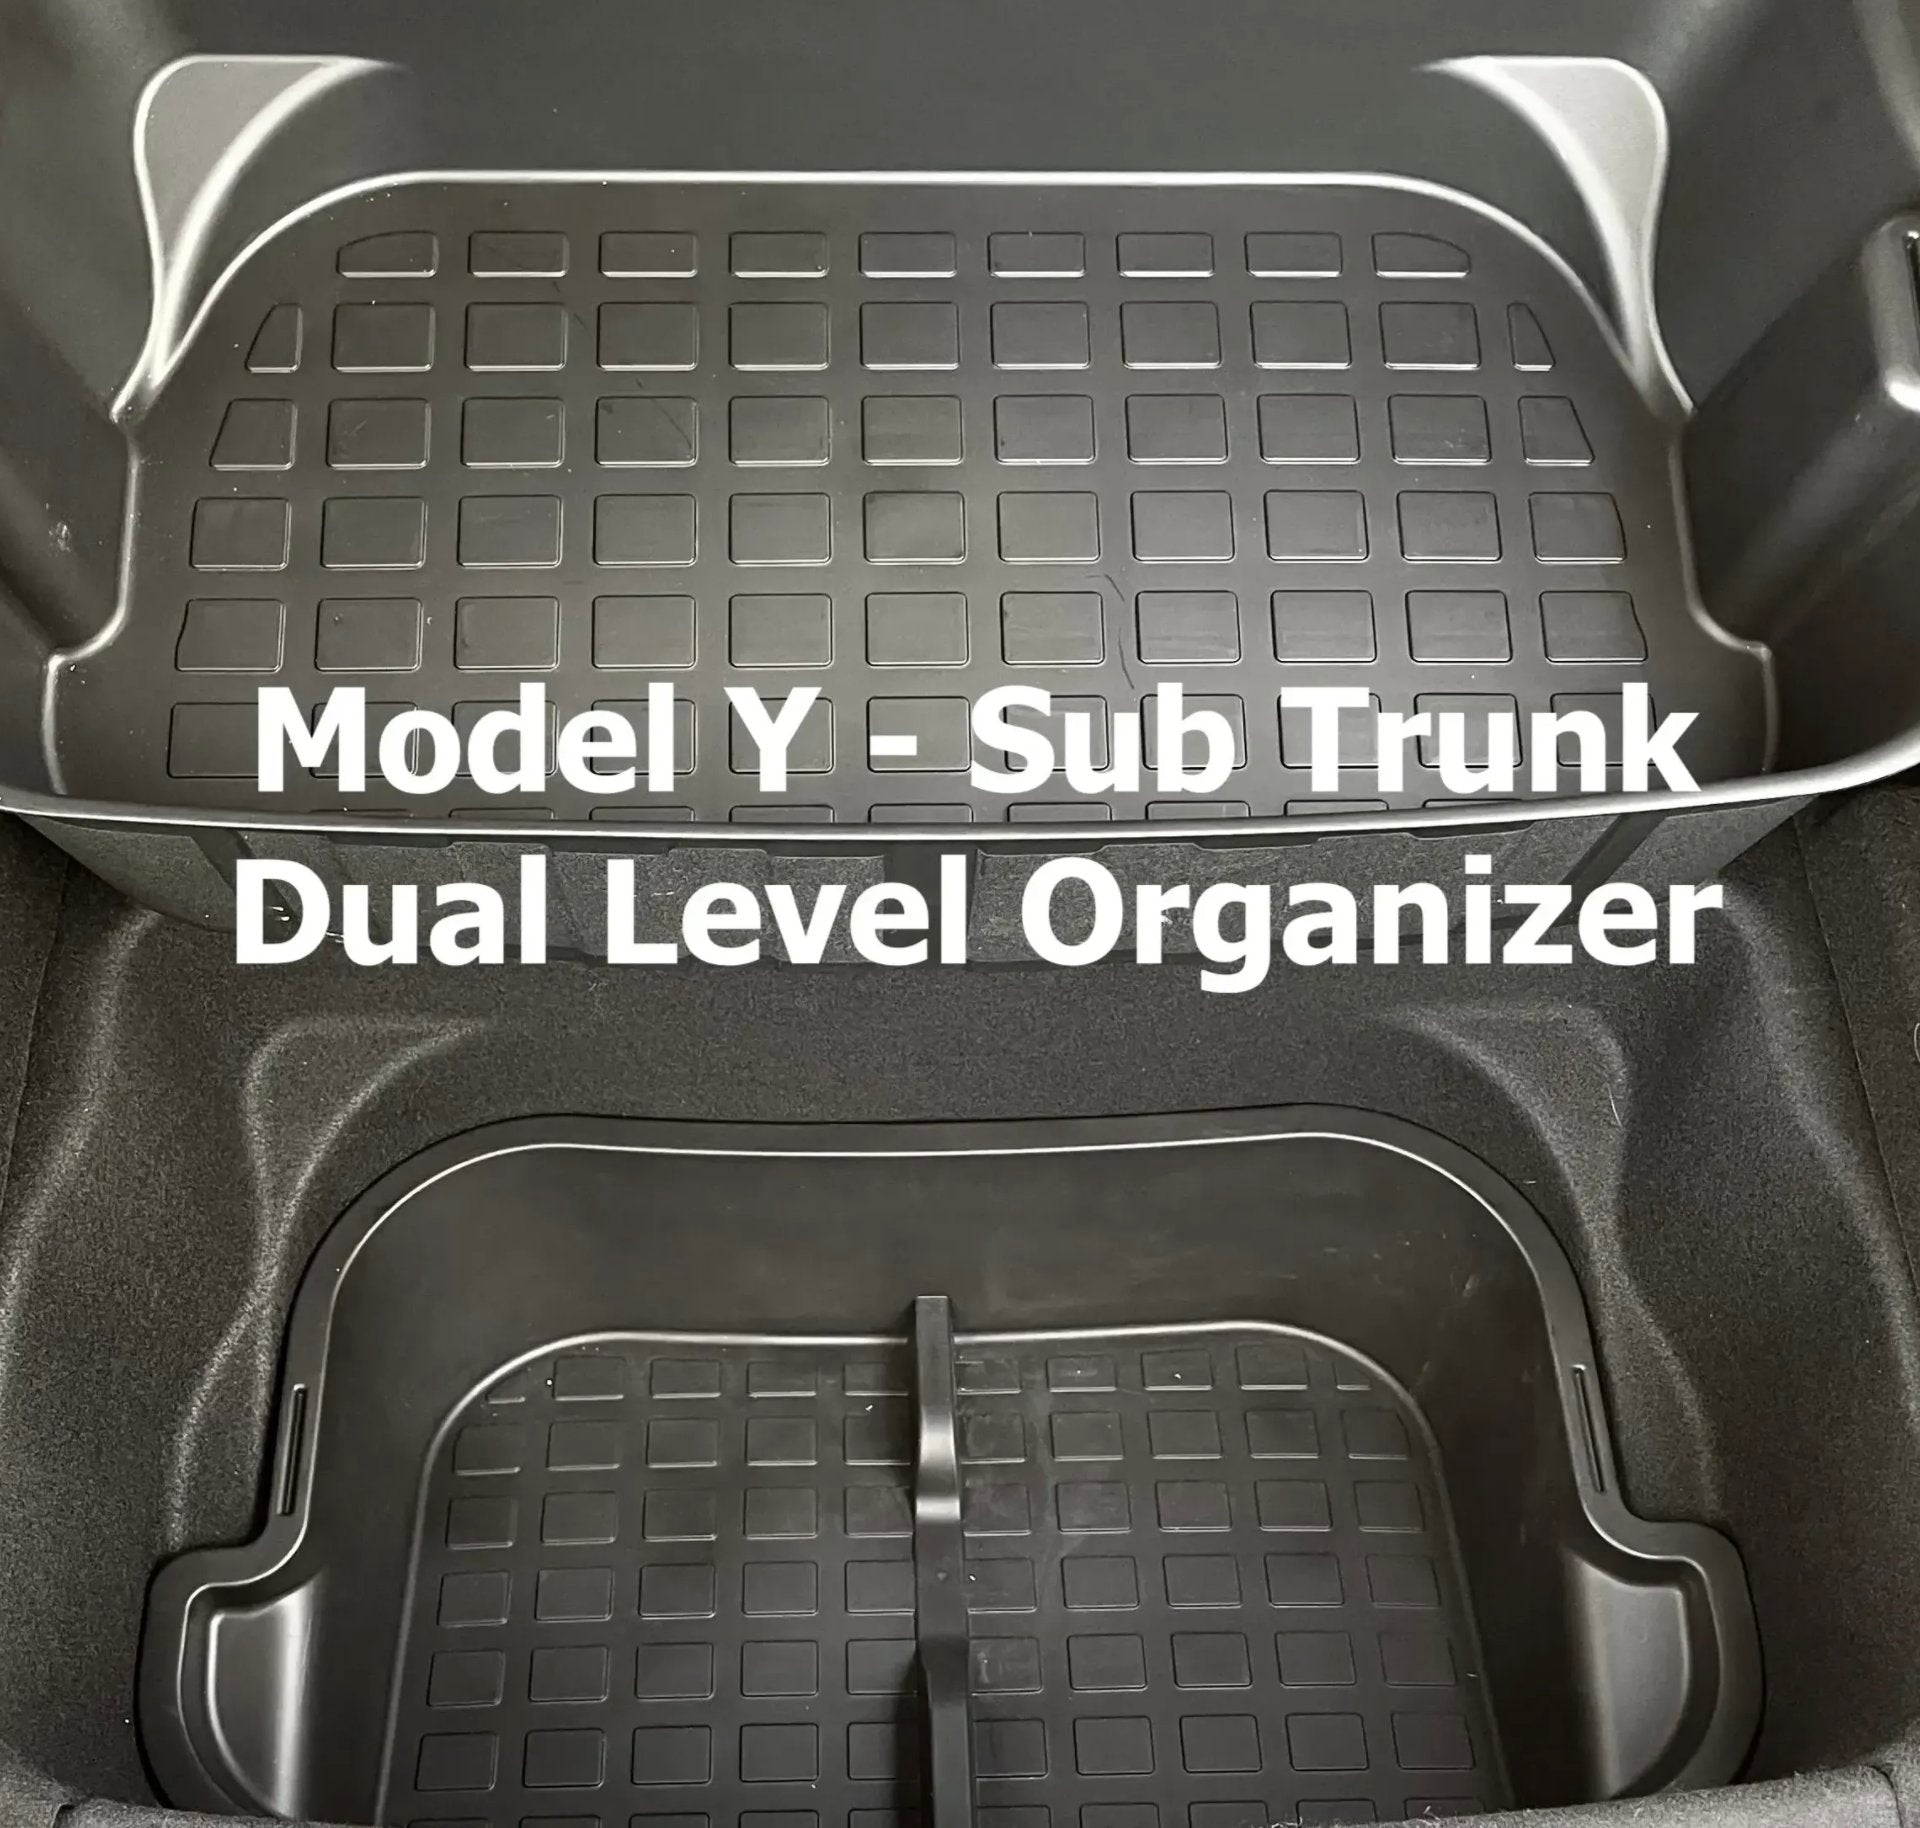 Tesla Model Y Front Trunk Hook - Anti-Swing Umbrella Holder – Tesla Maison